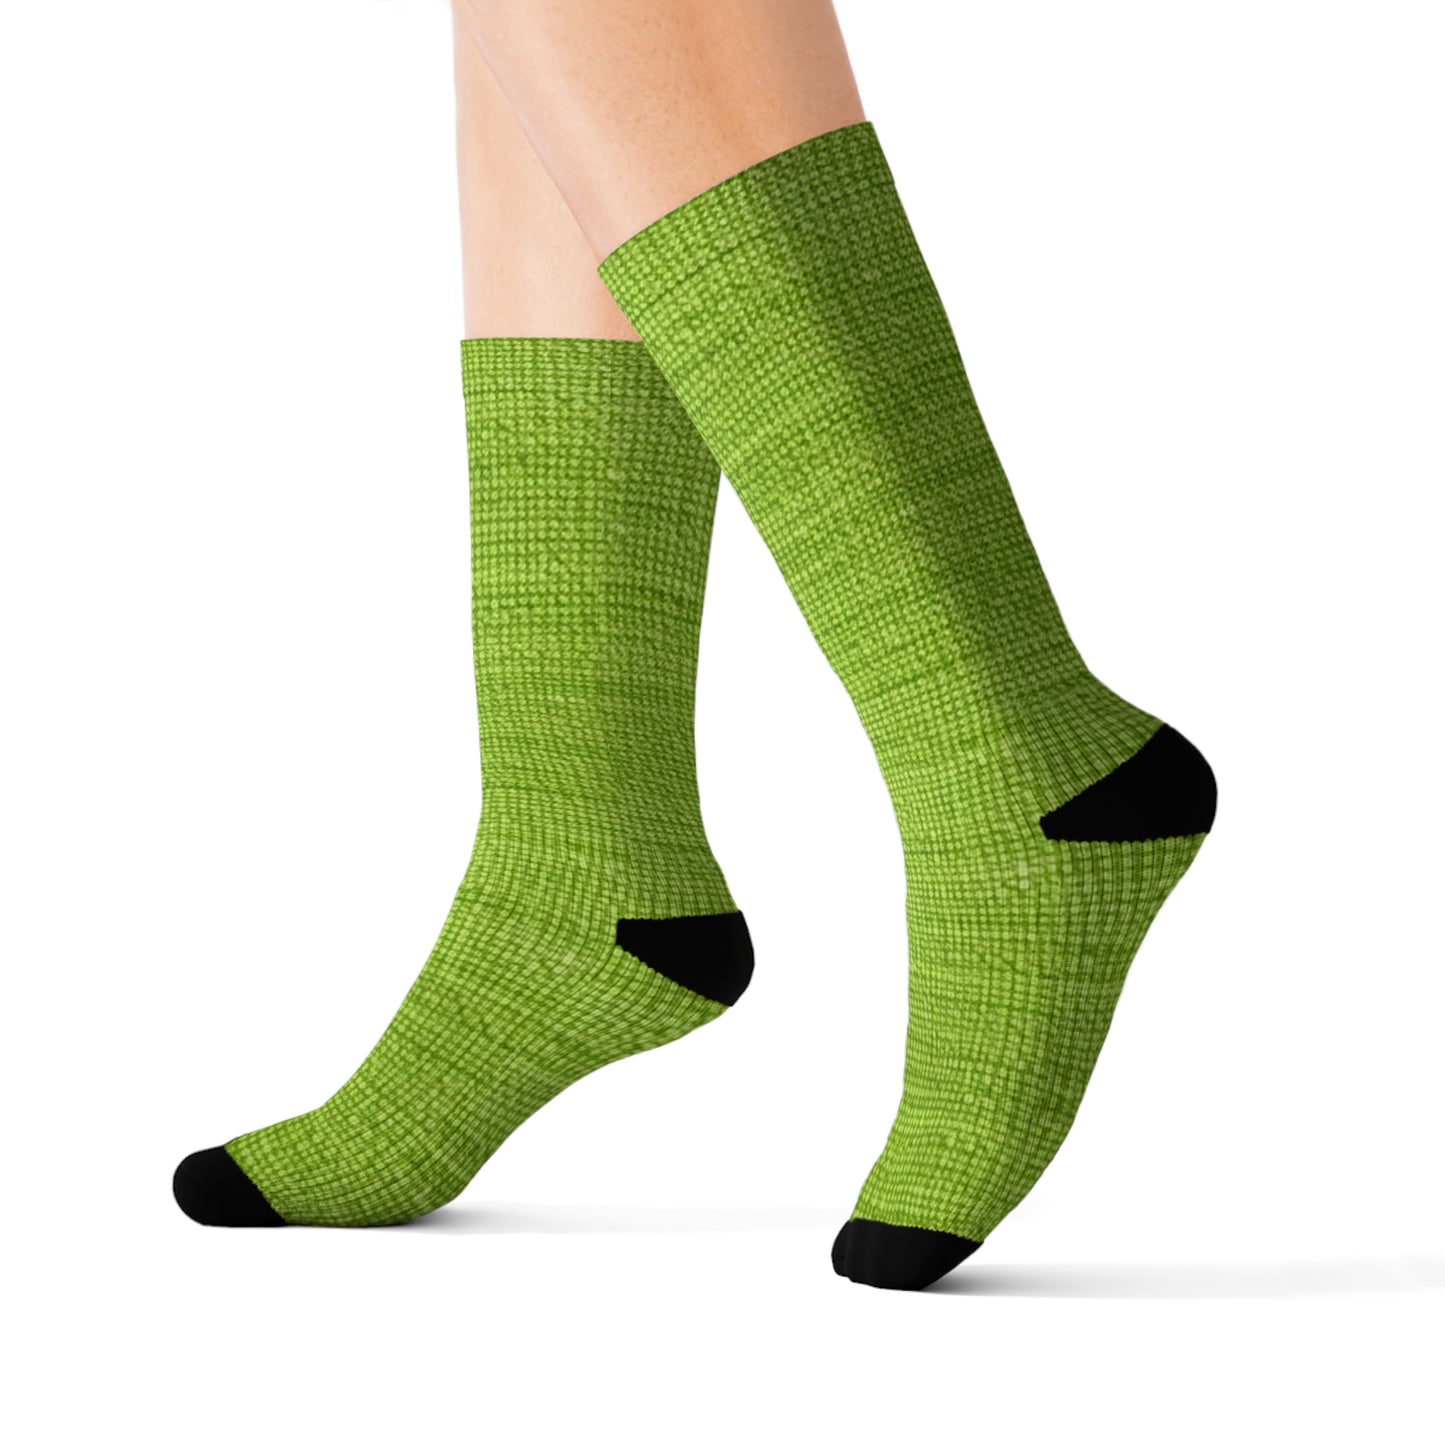 Lush Grass Neon Green: Denim-Inspired, Springtime Fabric Style - Sublimation Socks